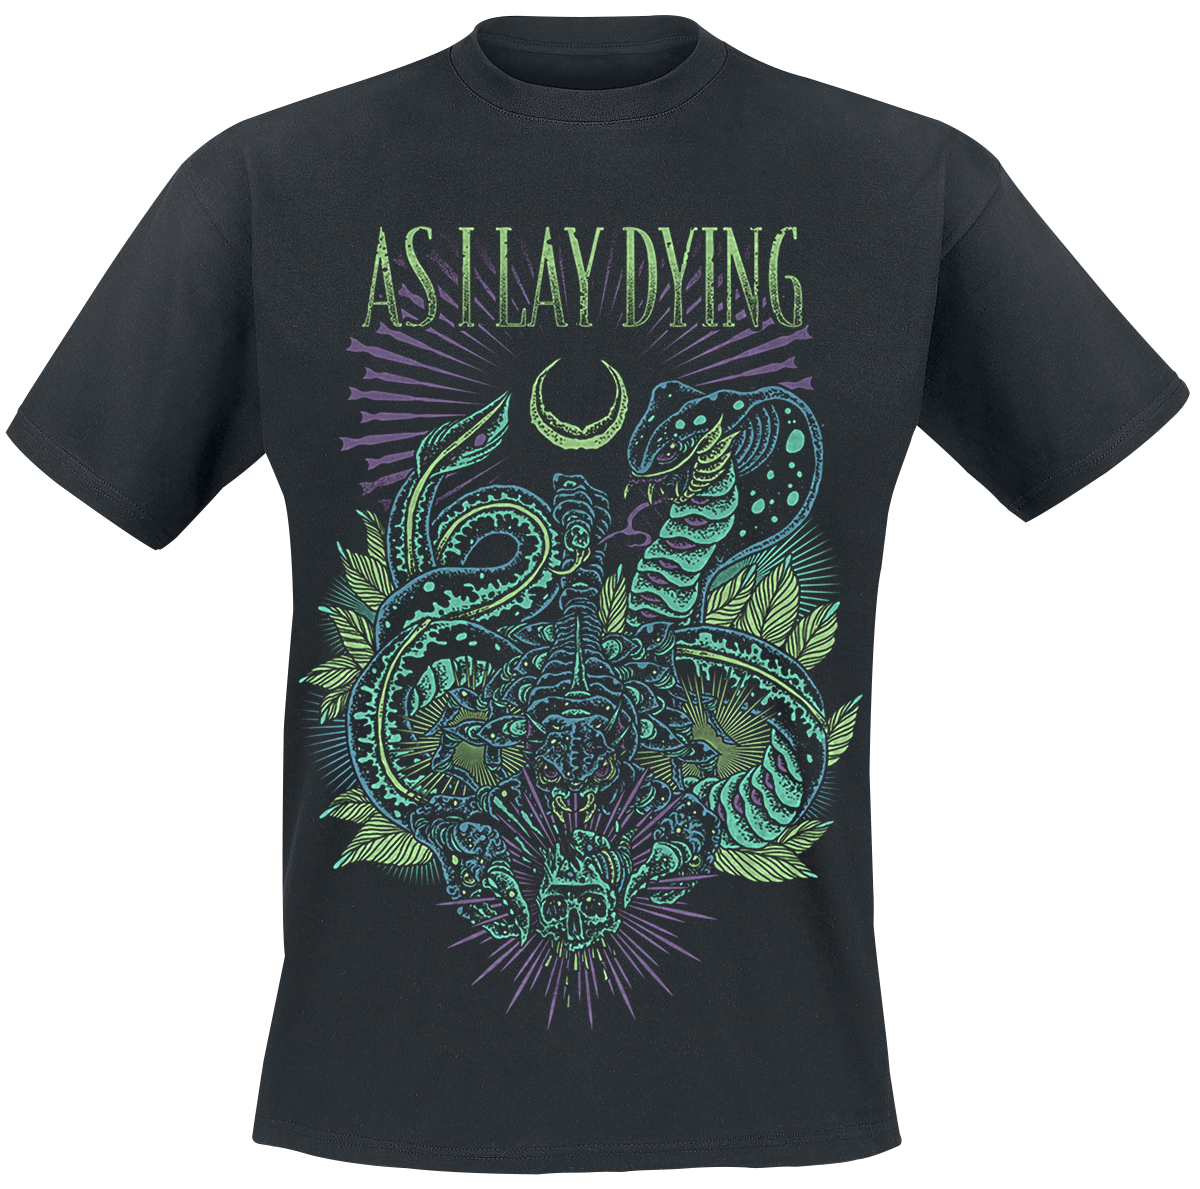 As I Lay Dying - Cobra - T-Shirt - black image